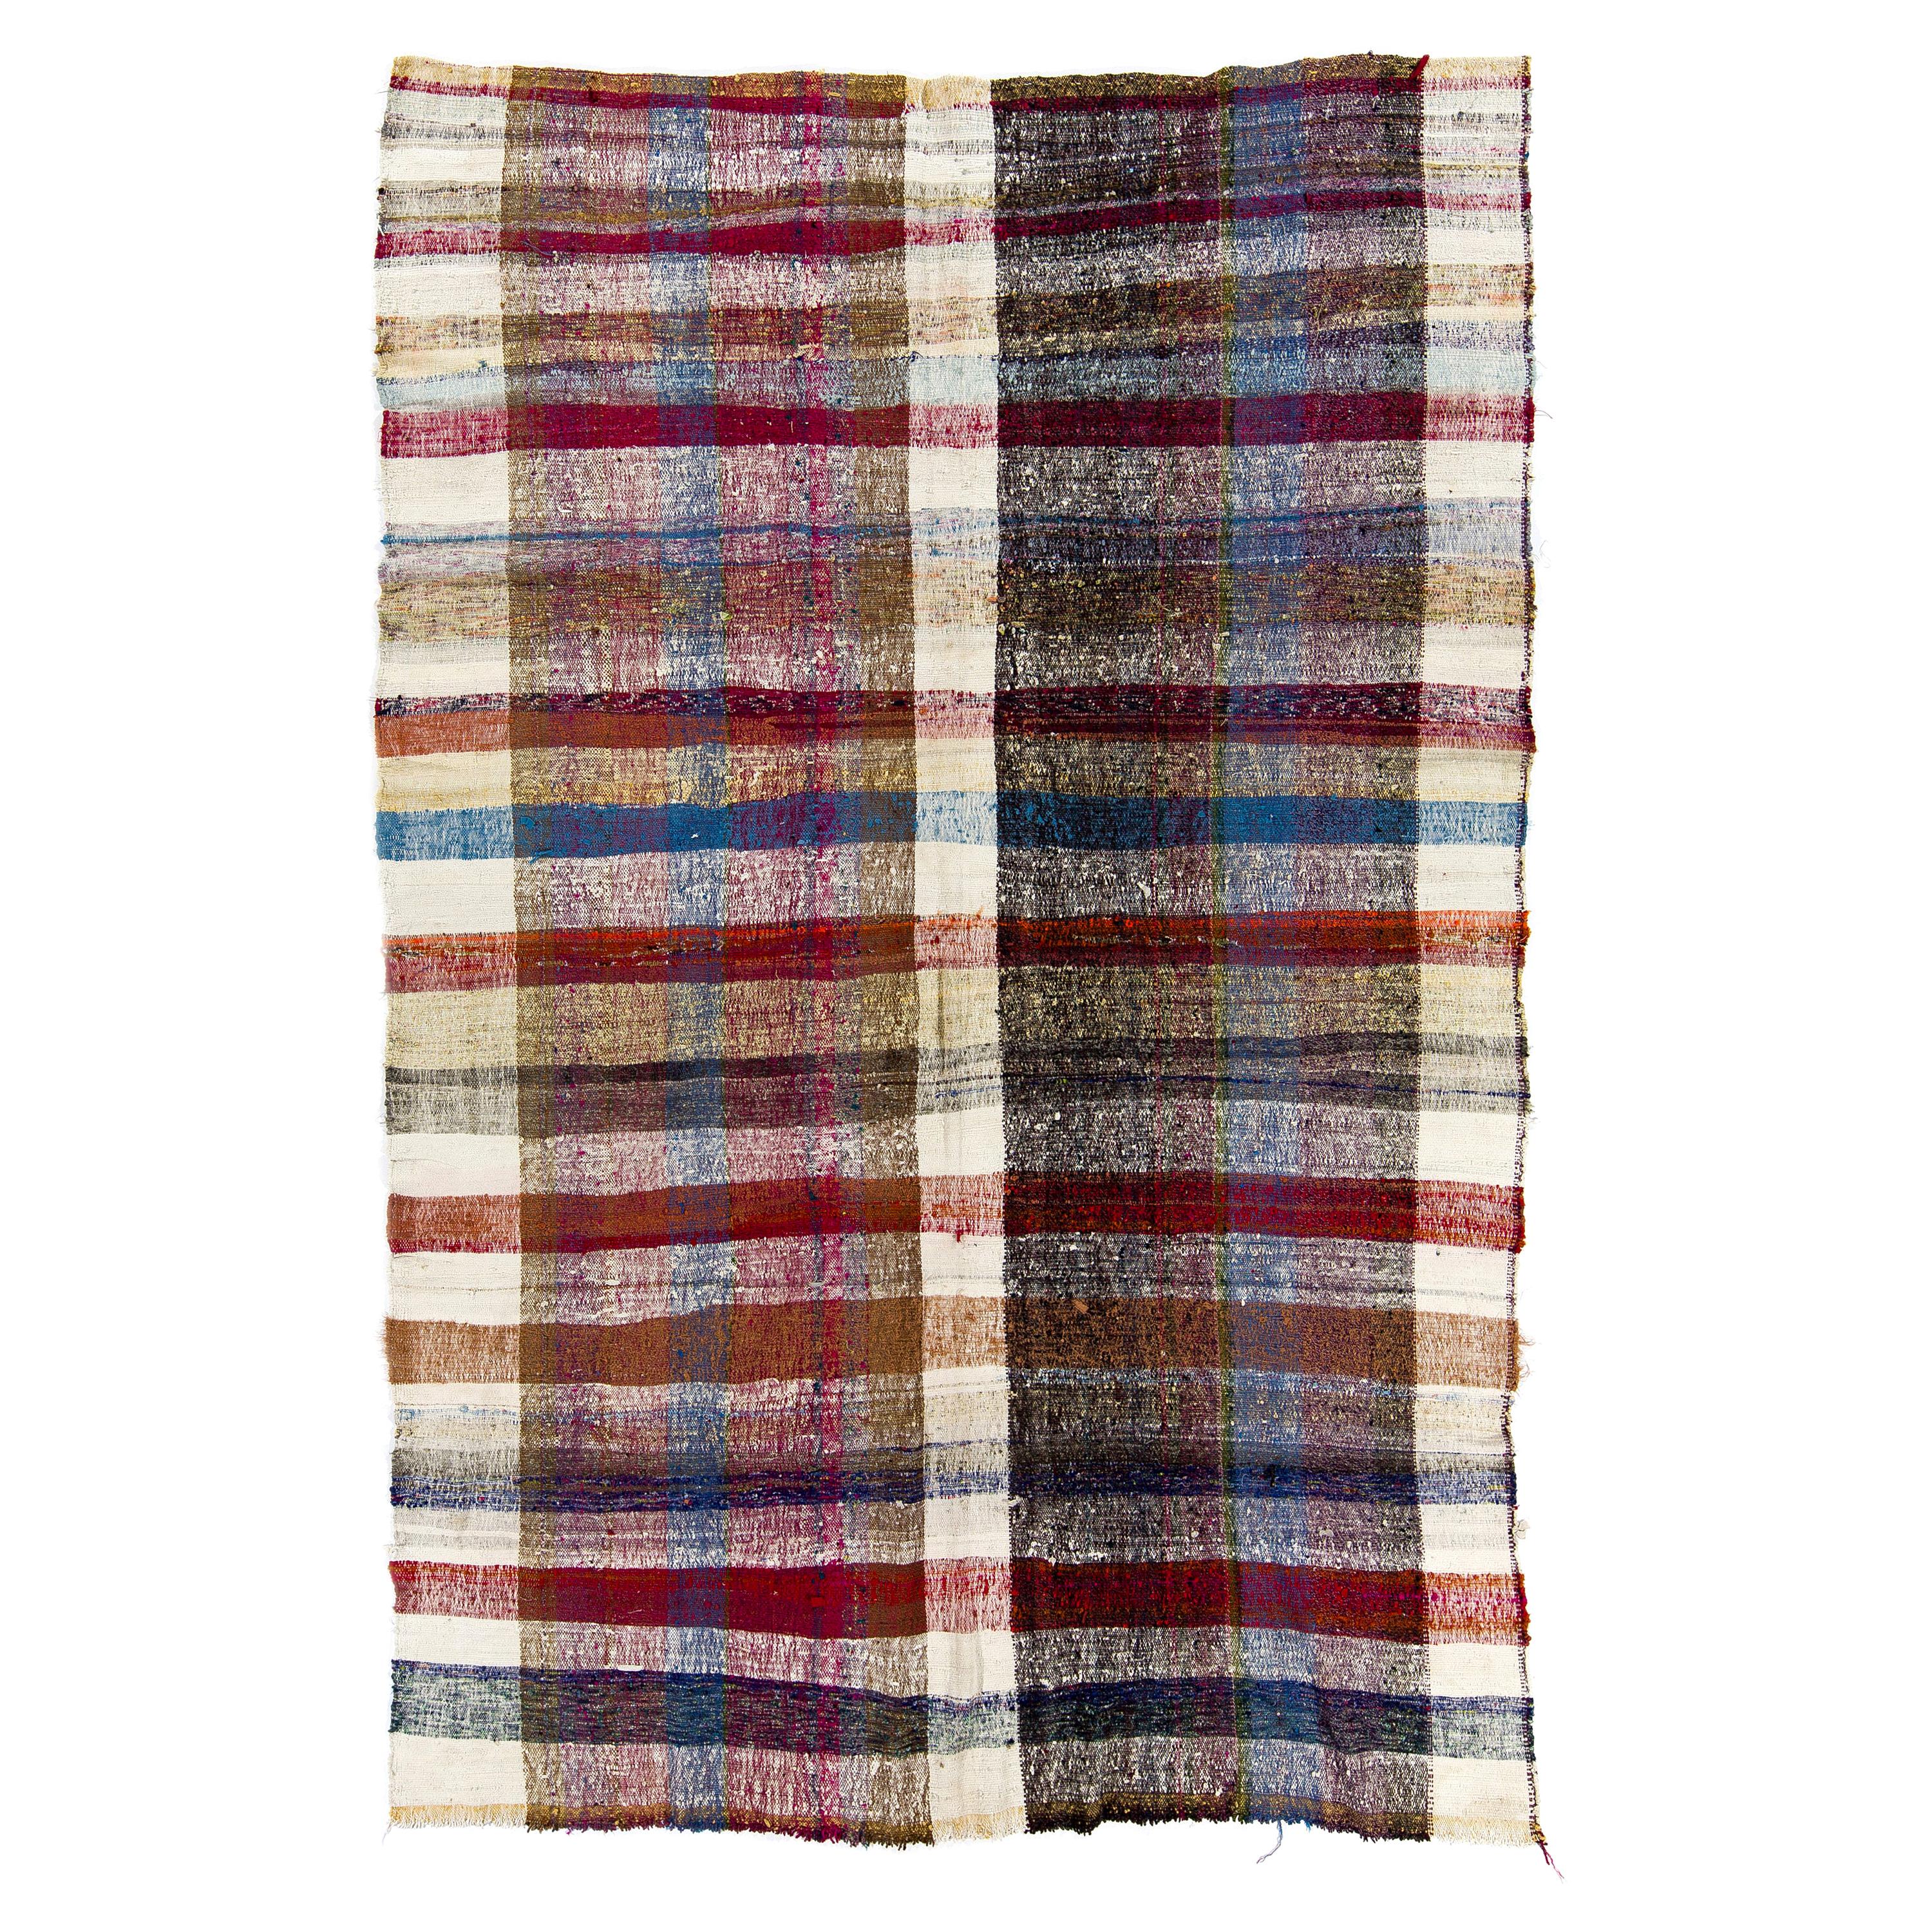 6.6x10 Ft Colorful Stripes Hand-Woven Vintage Cotton Rag Kilim, Reversible